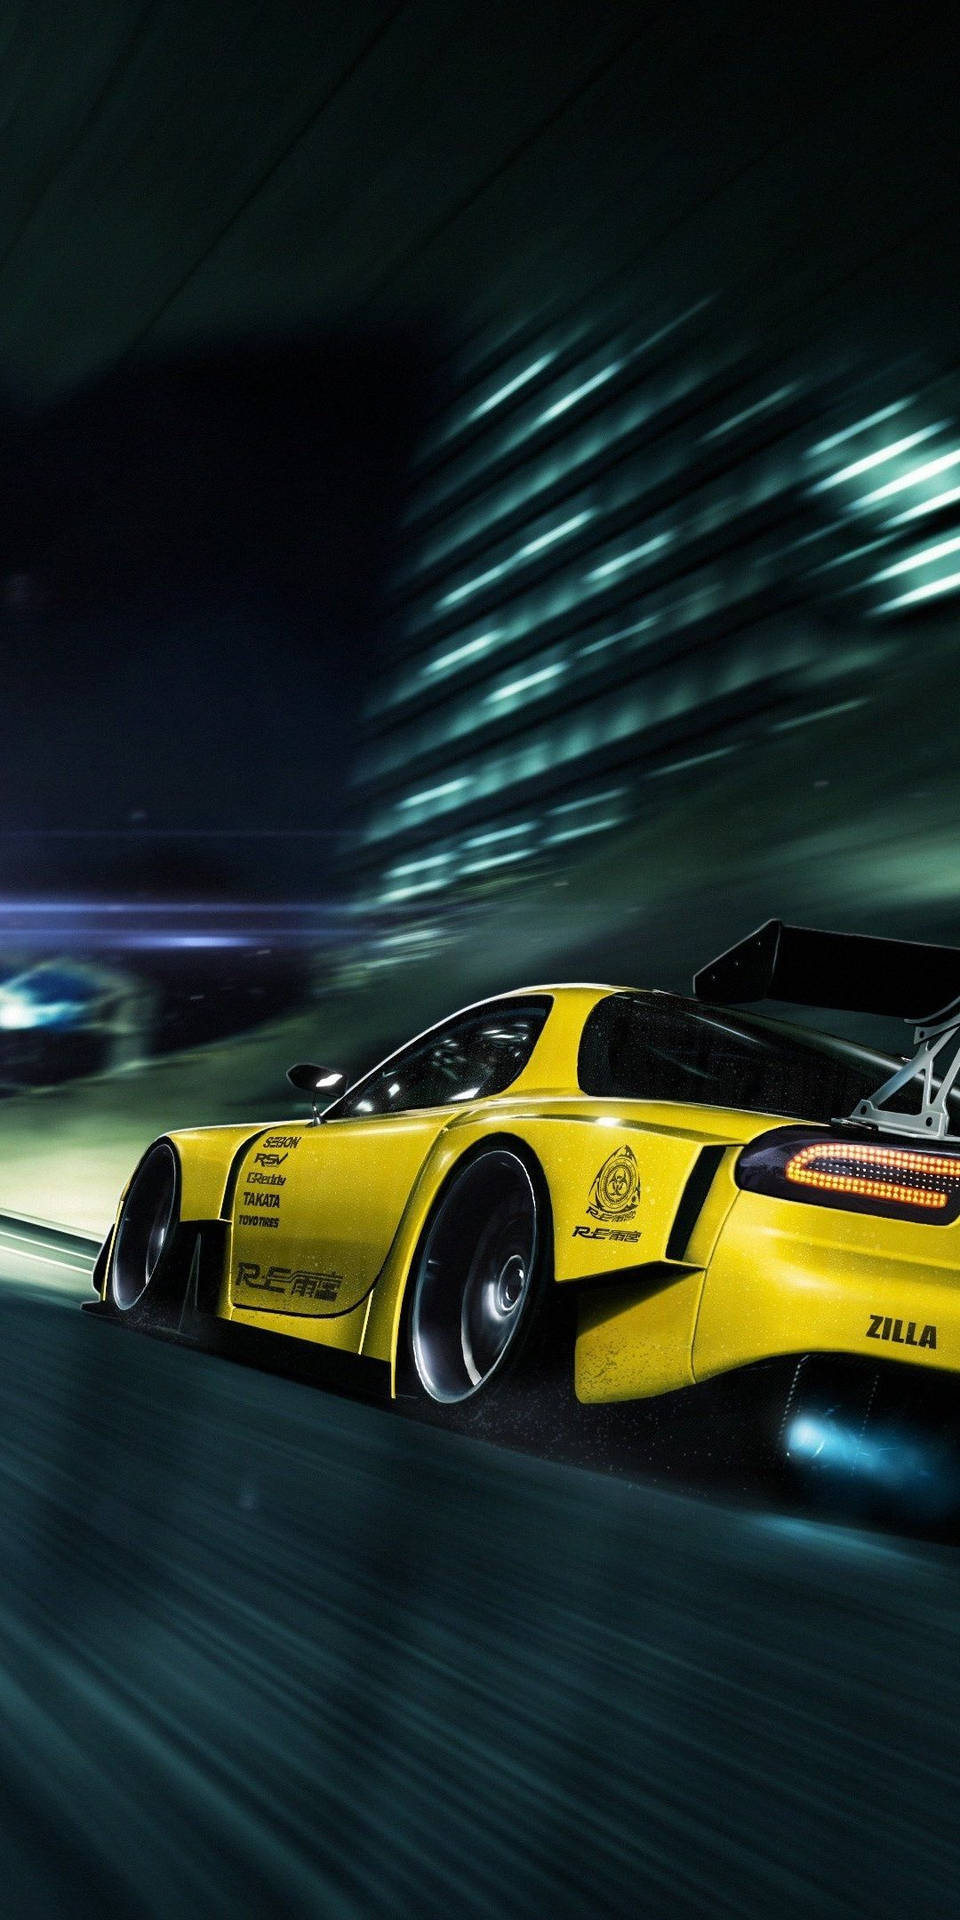 a yellow sports car driving down a dark street Wallpaper